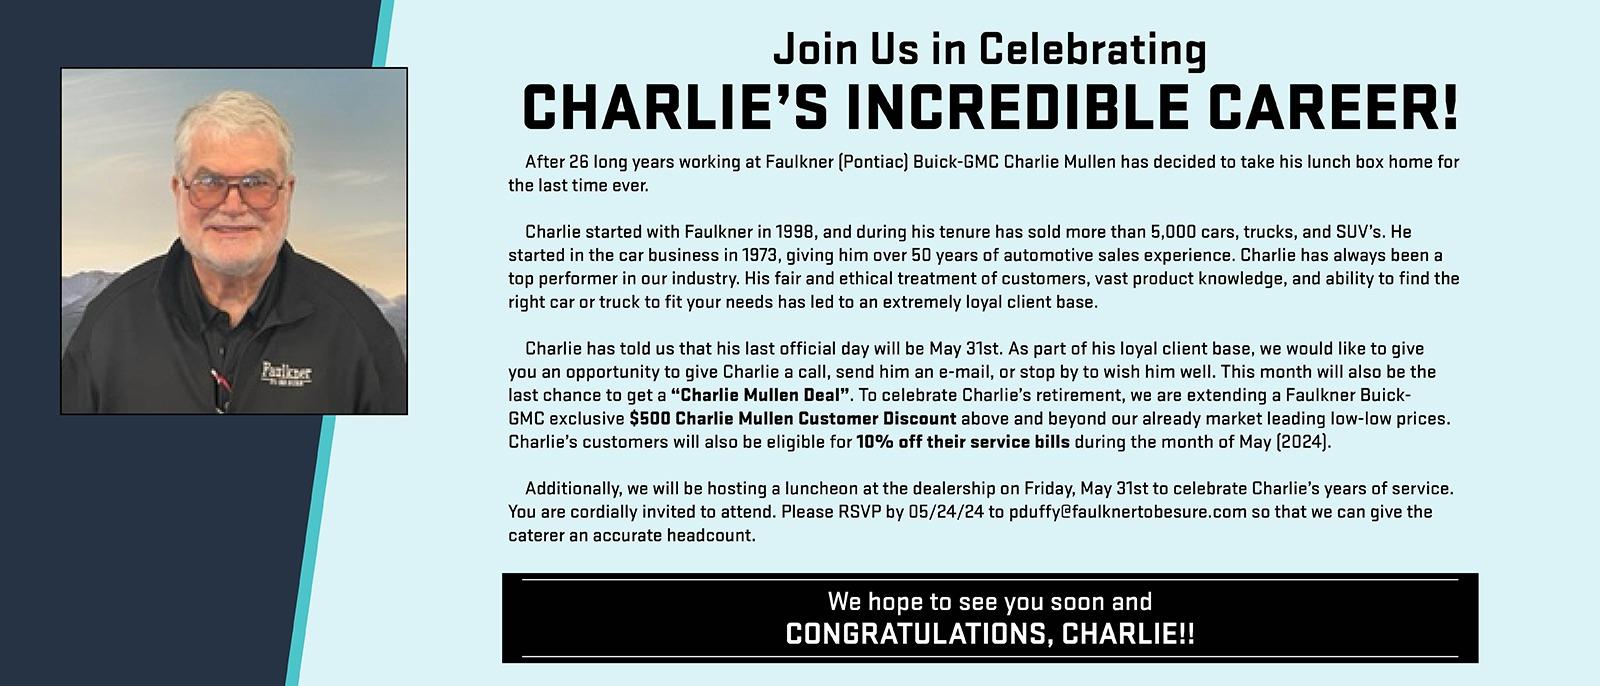 Join Us in Celebrating Charlie’s Incredible Career!